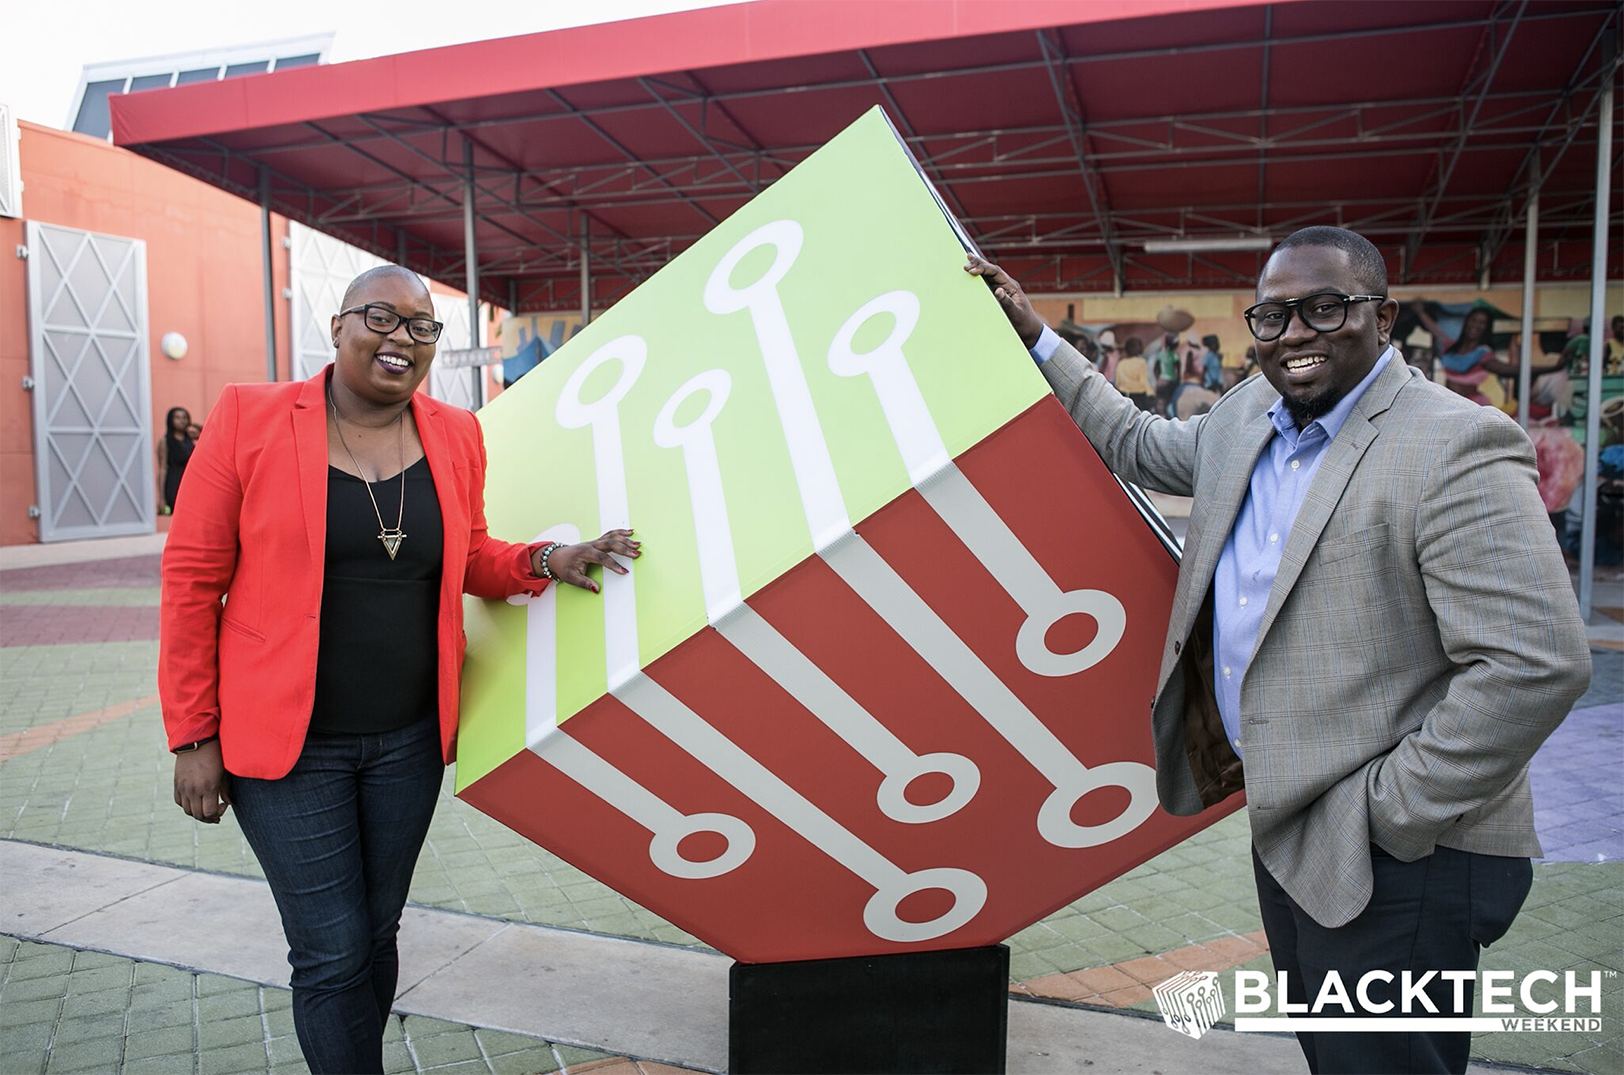 BlackTech Week curating GEW conversation between founders with ‘true experiences’